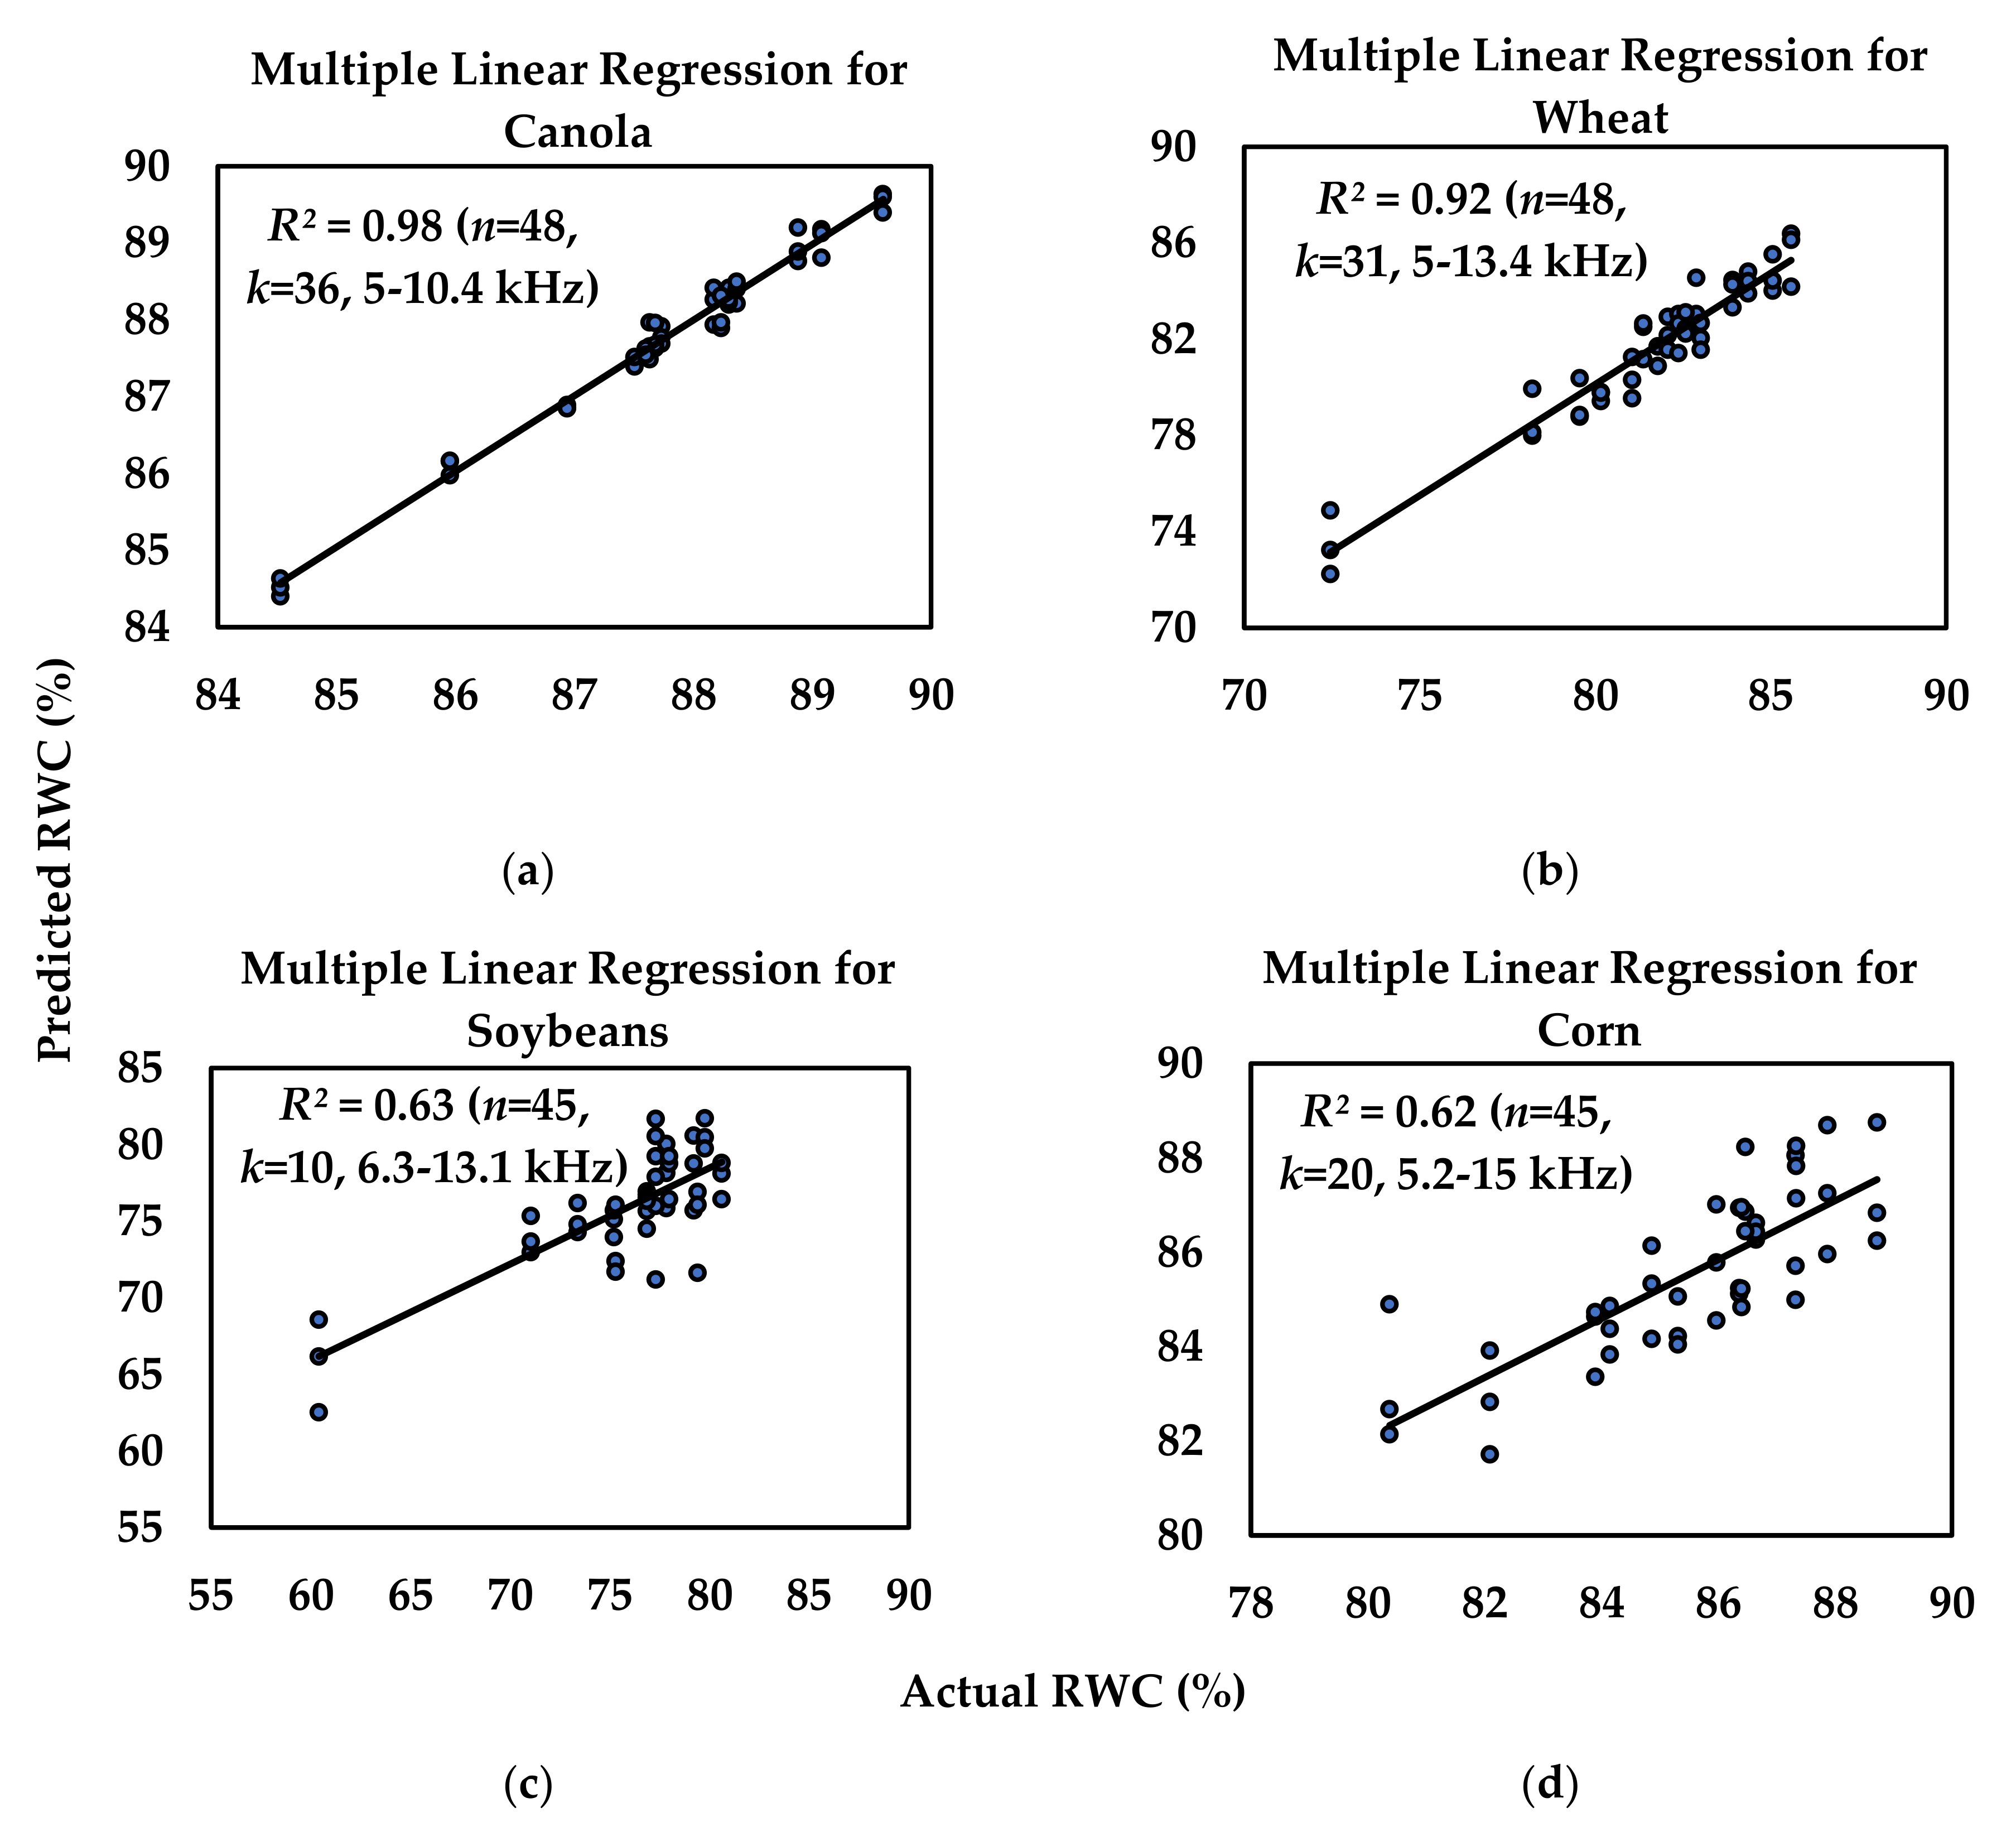 xlminer analysis toolpak mulivariable regression